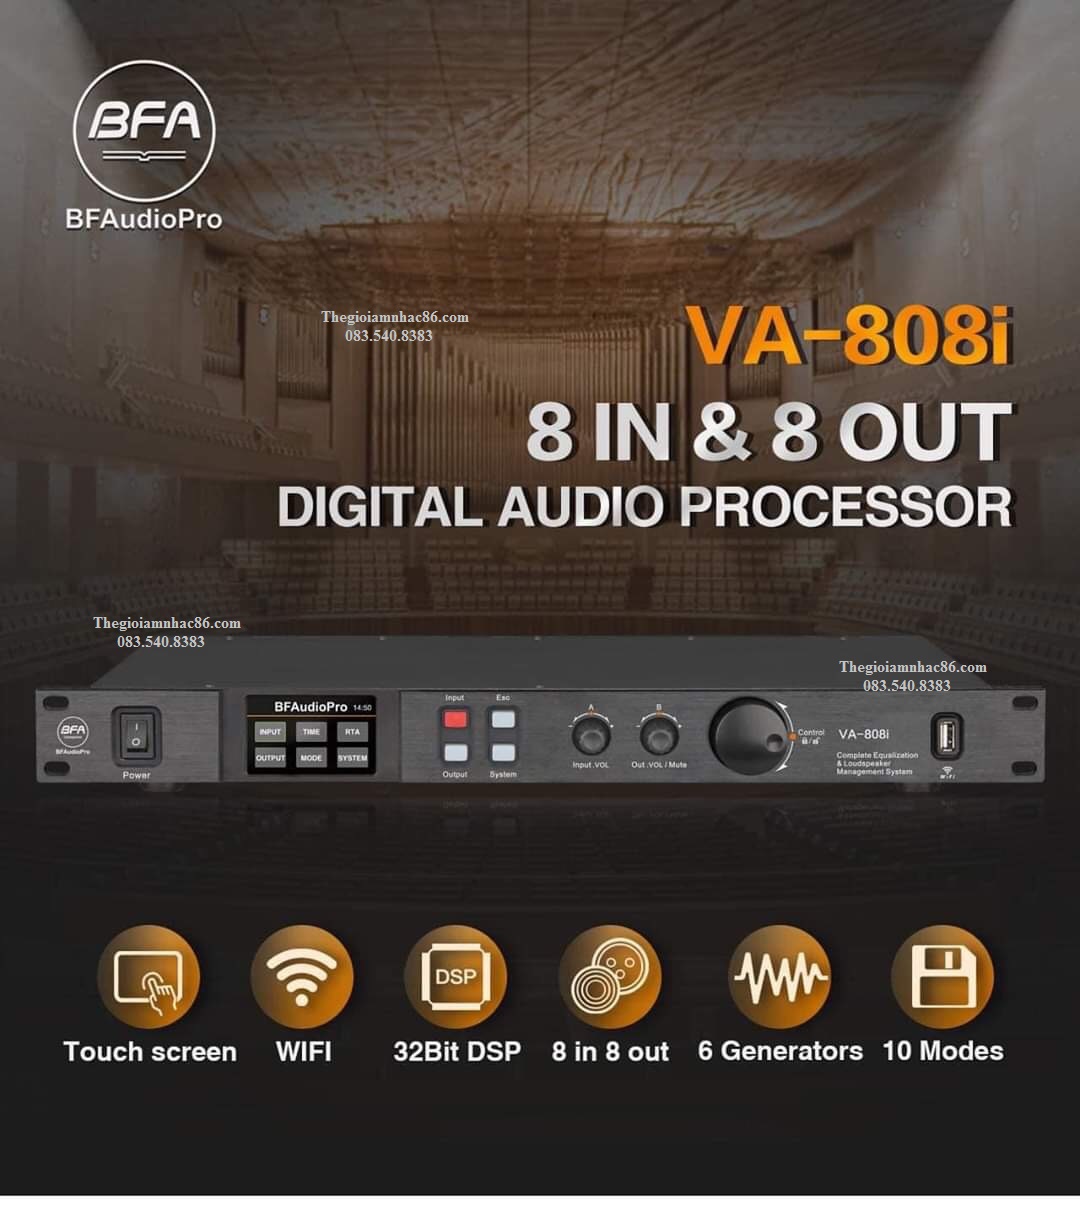 BFAudioPro VA-808i